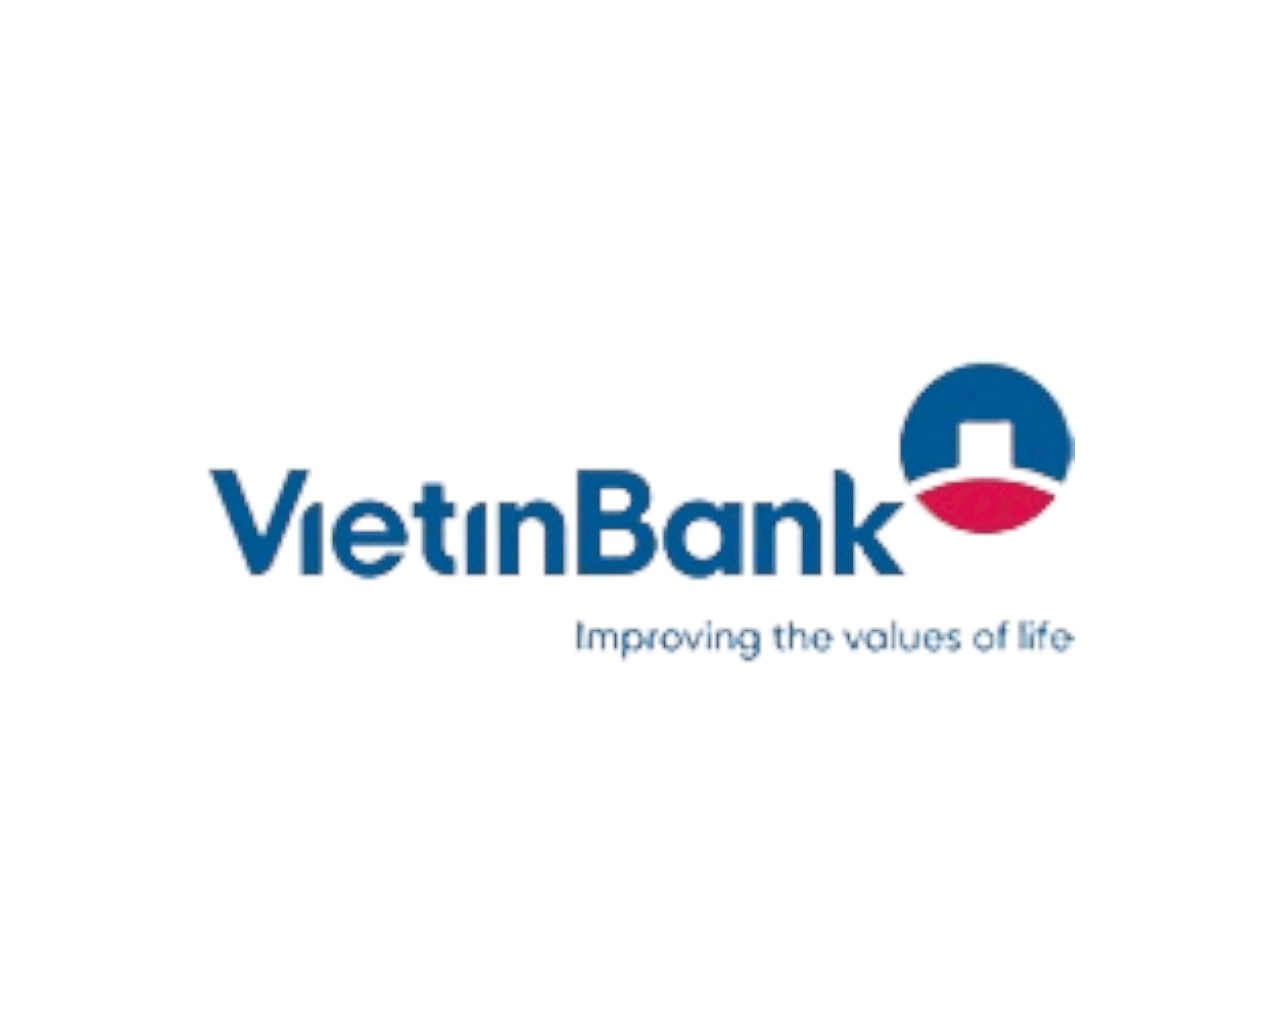 XPR Integrates with VietinBank